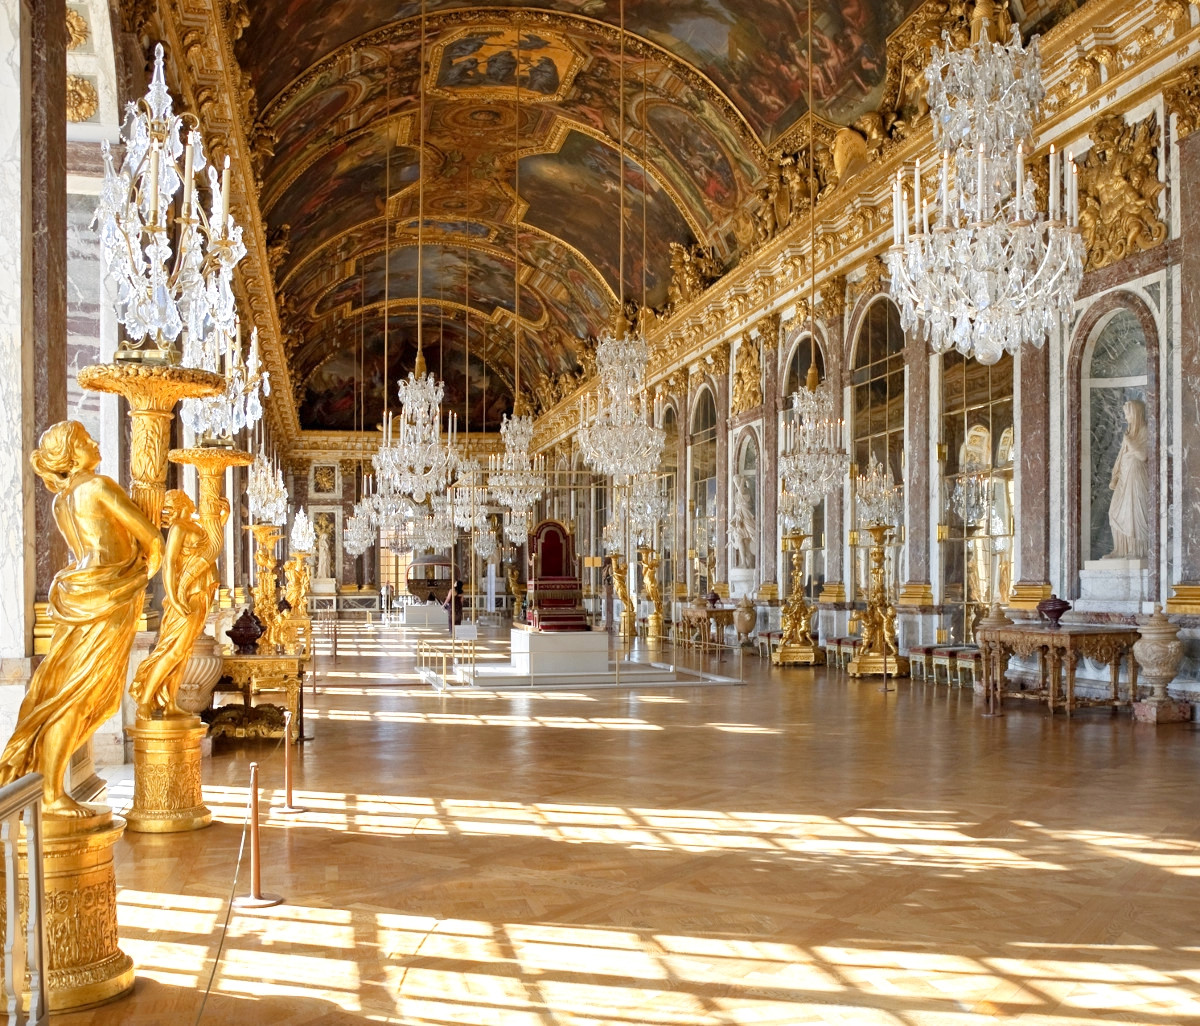 Halls of Mirrors at Versailles. Credit Myrabella